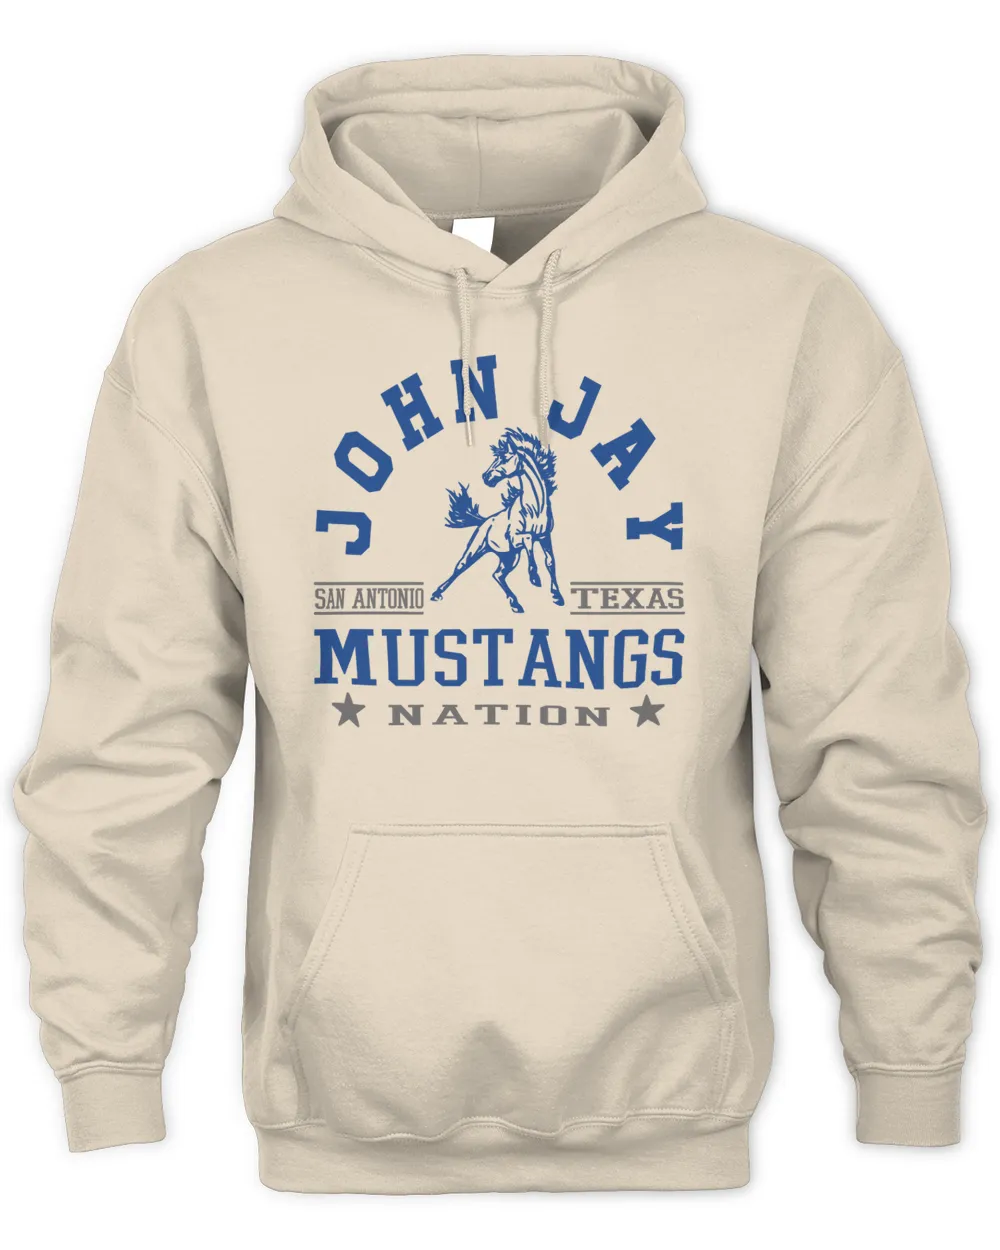 John Jay Mustangs Nation TX